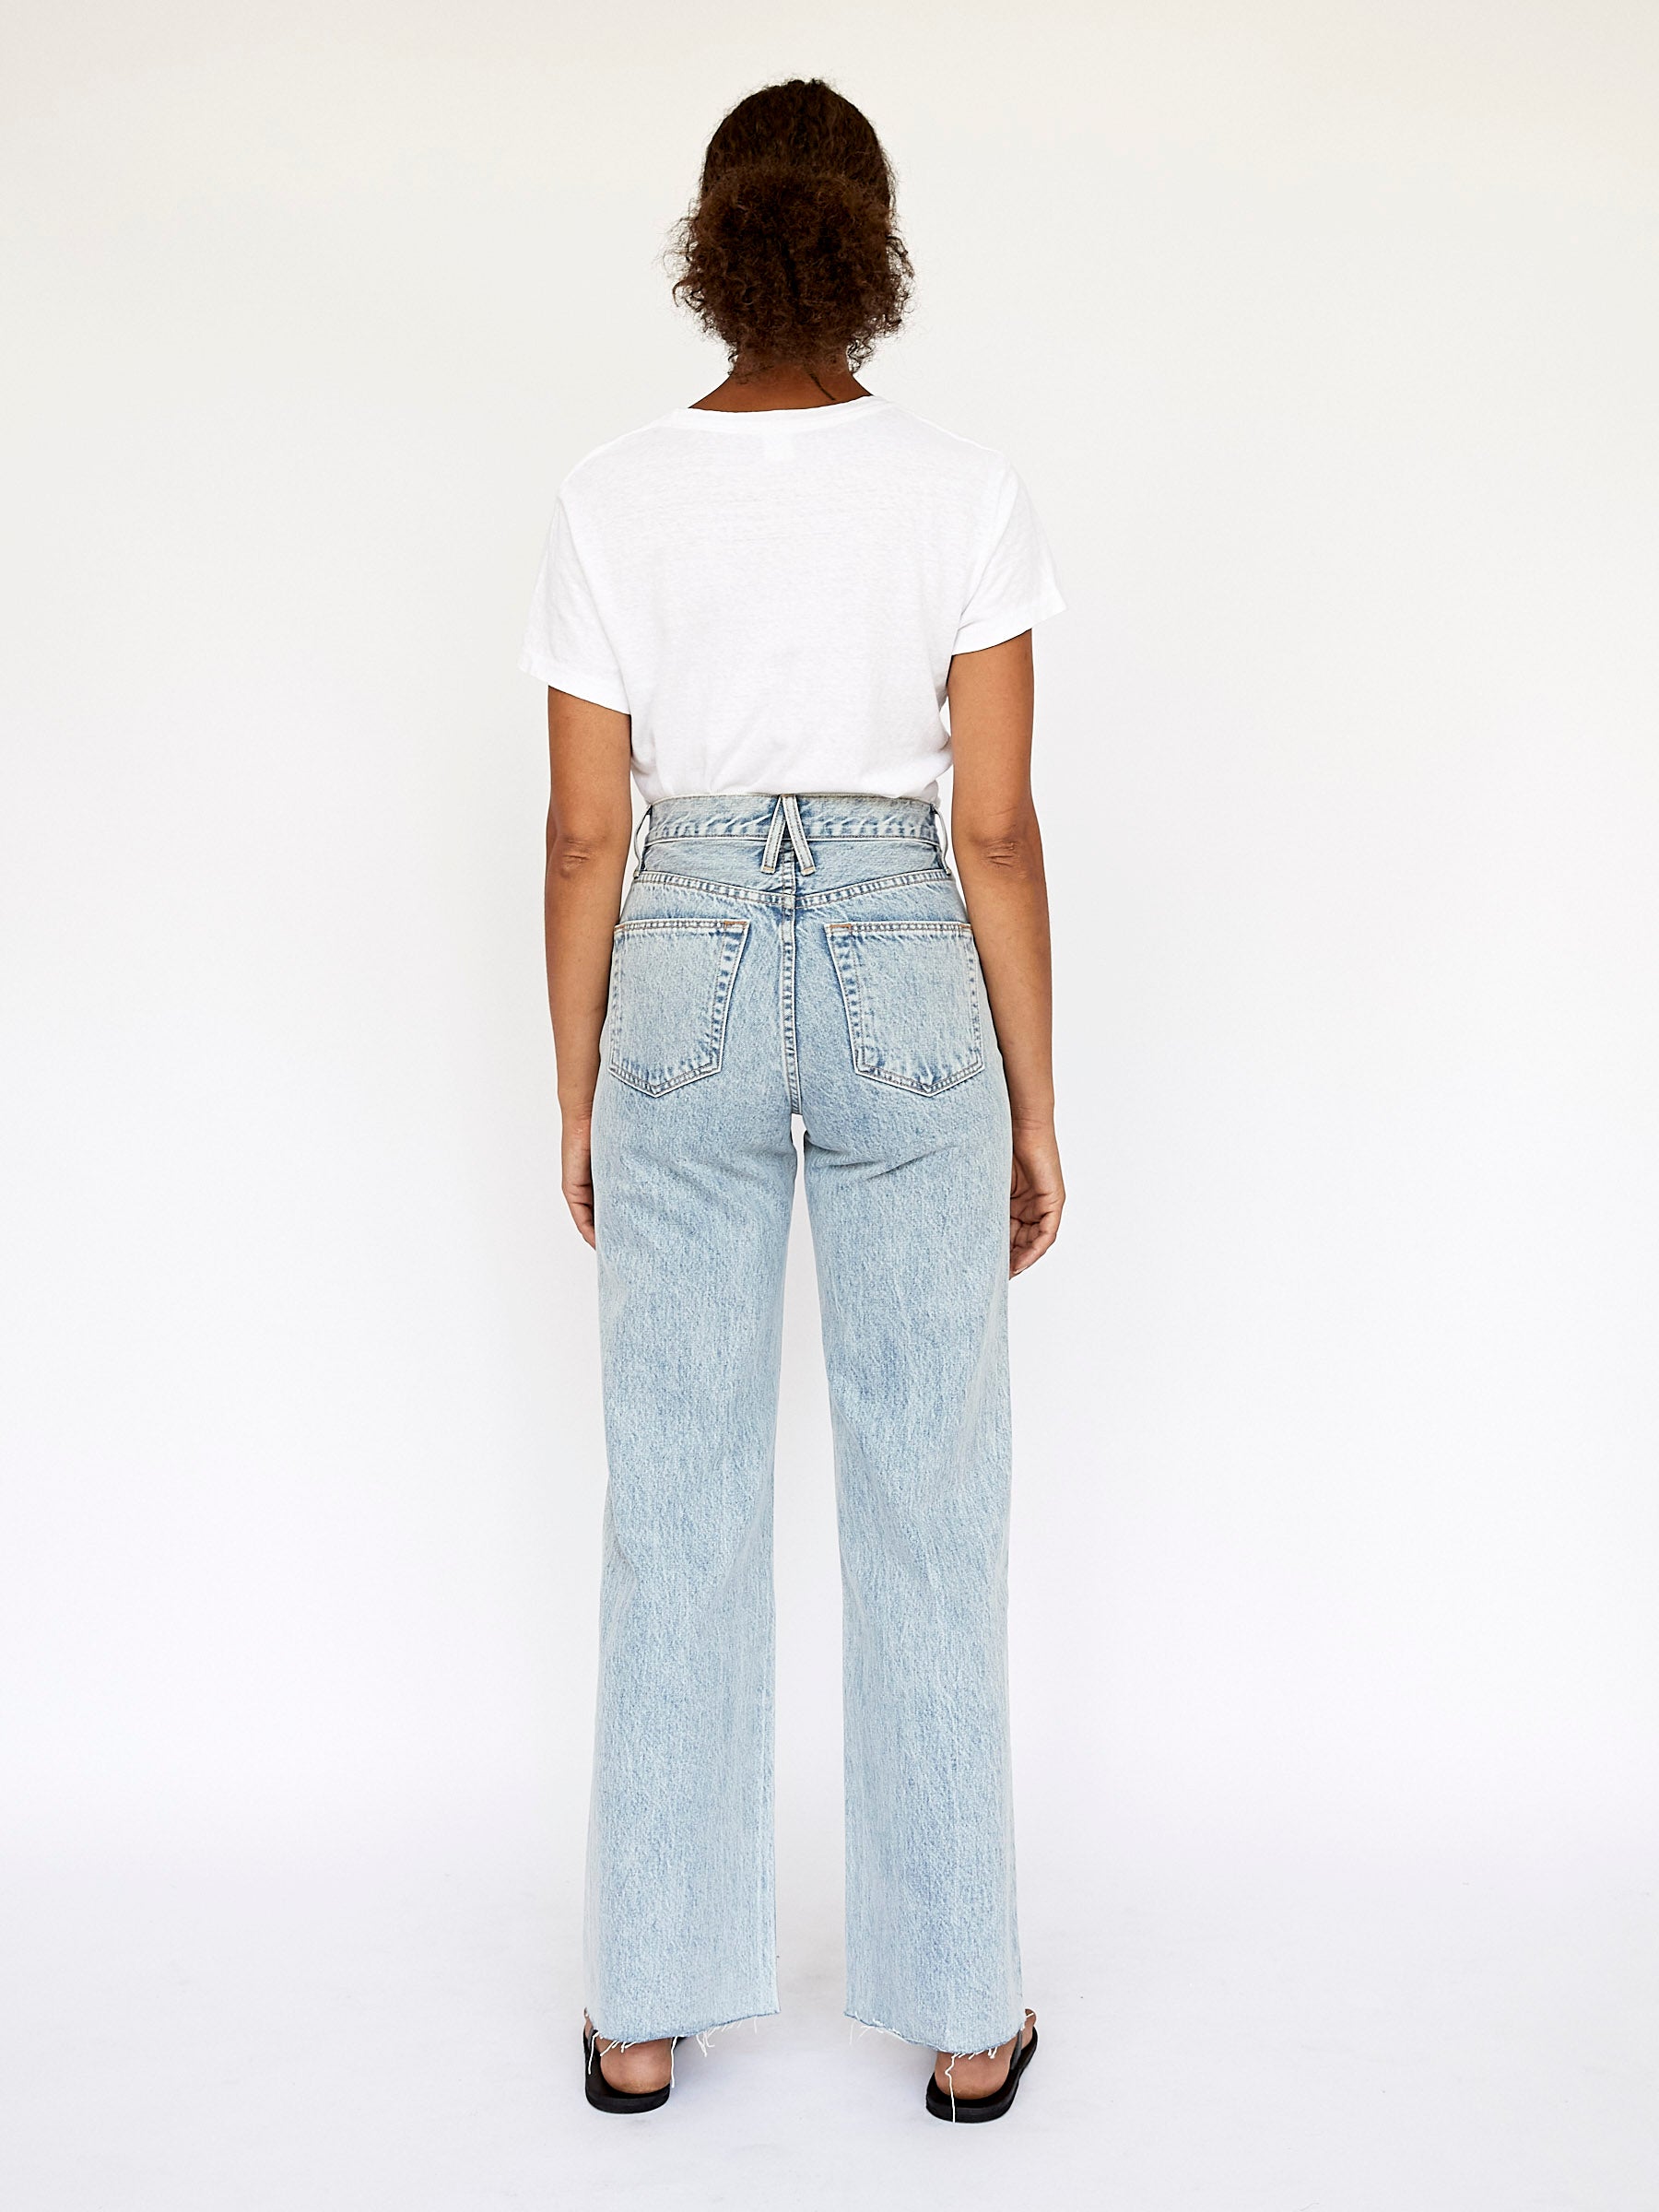 SLVRLAKE Essential Shop | Denim The | Jeans Women\'s UNDONE